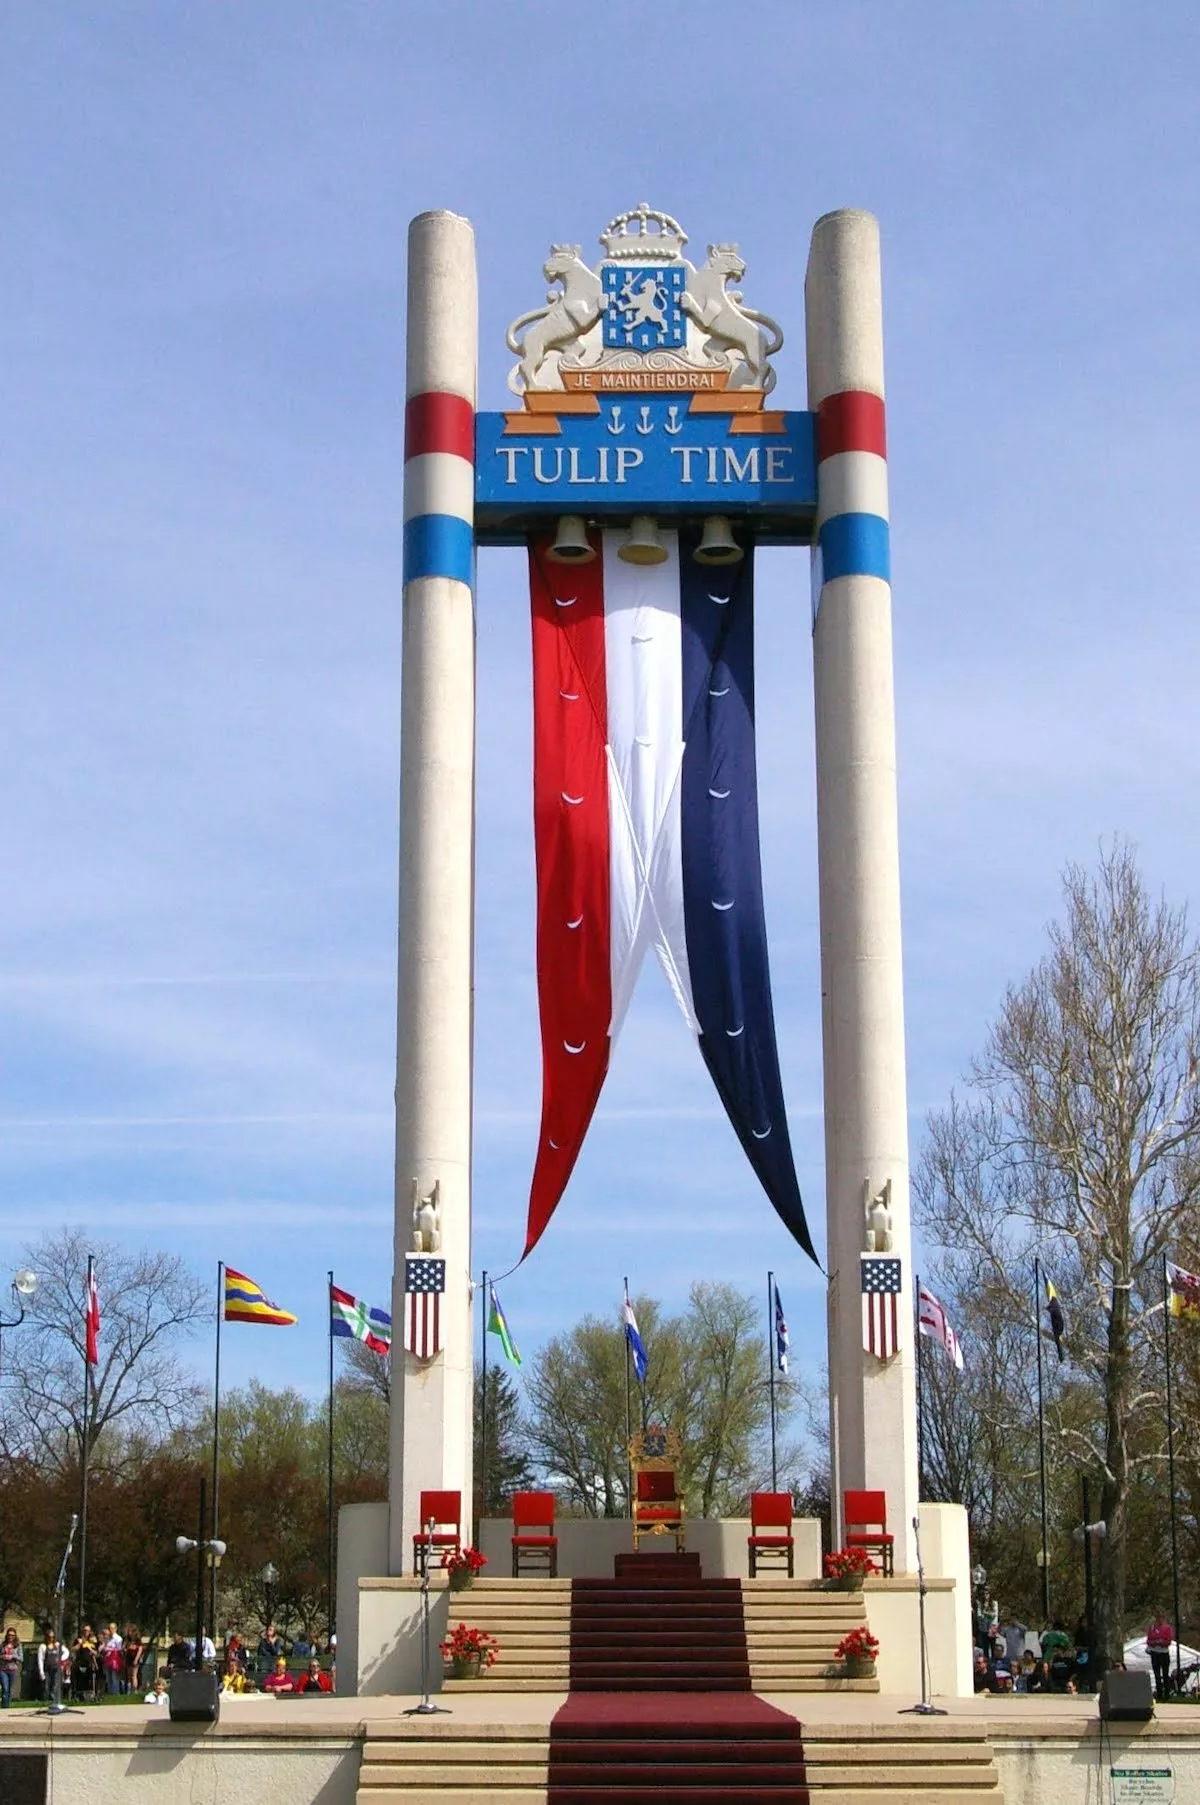 Tulip Time grandstand with banner in Pella, Iowa